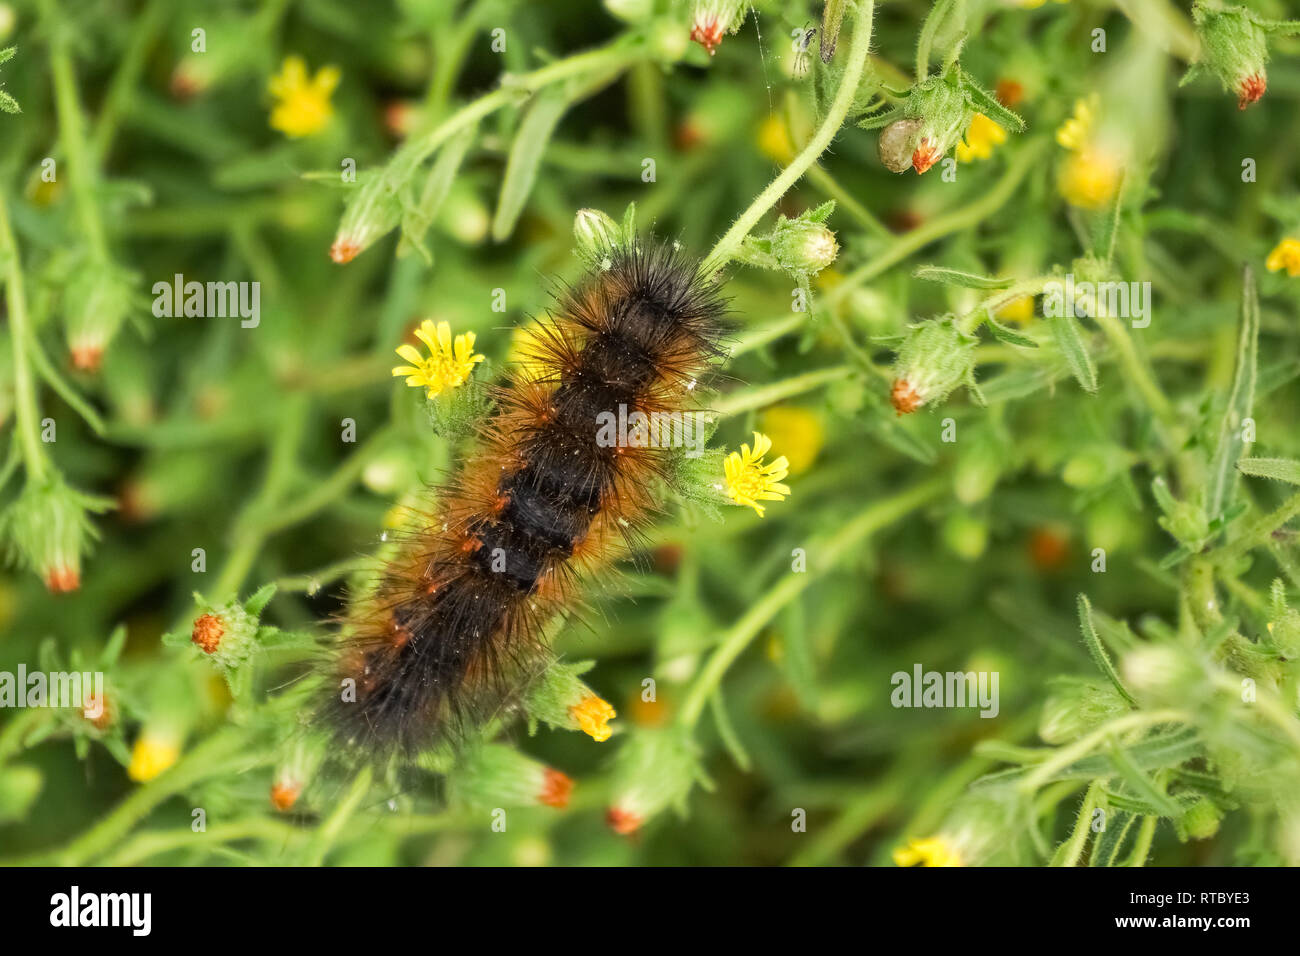 Salt Marsh Moth caterpillar (Estigmene acrea) on a green plant with small yellow flowers, California Stock Photo